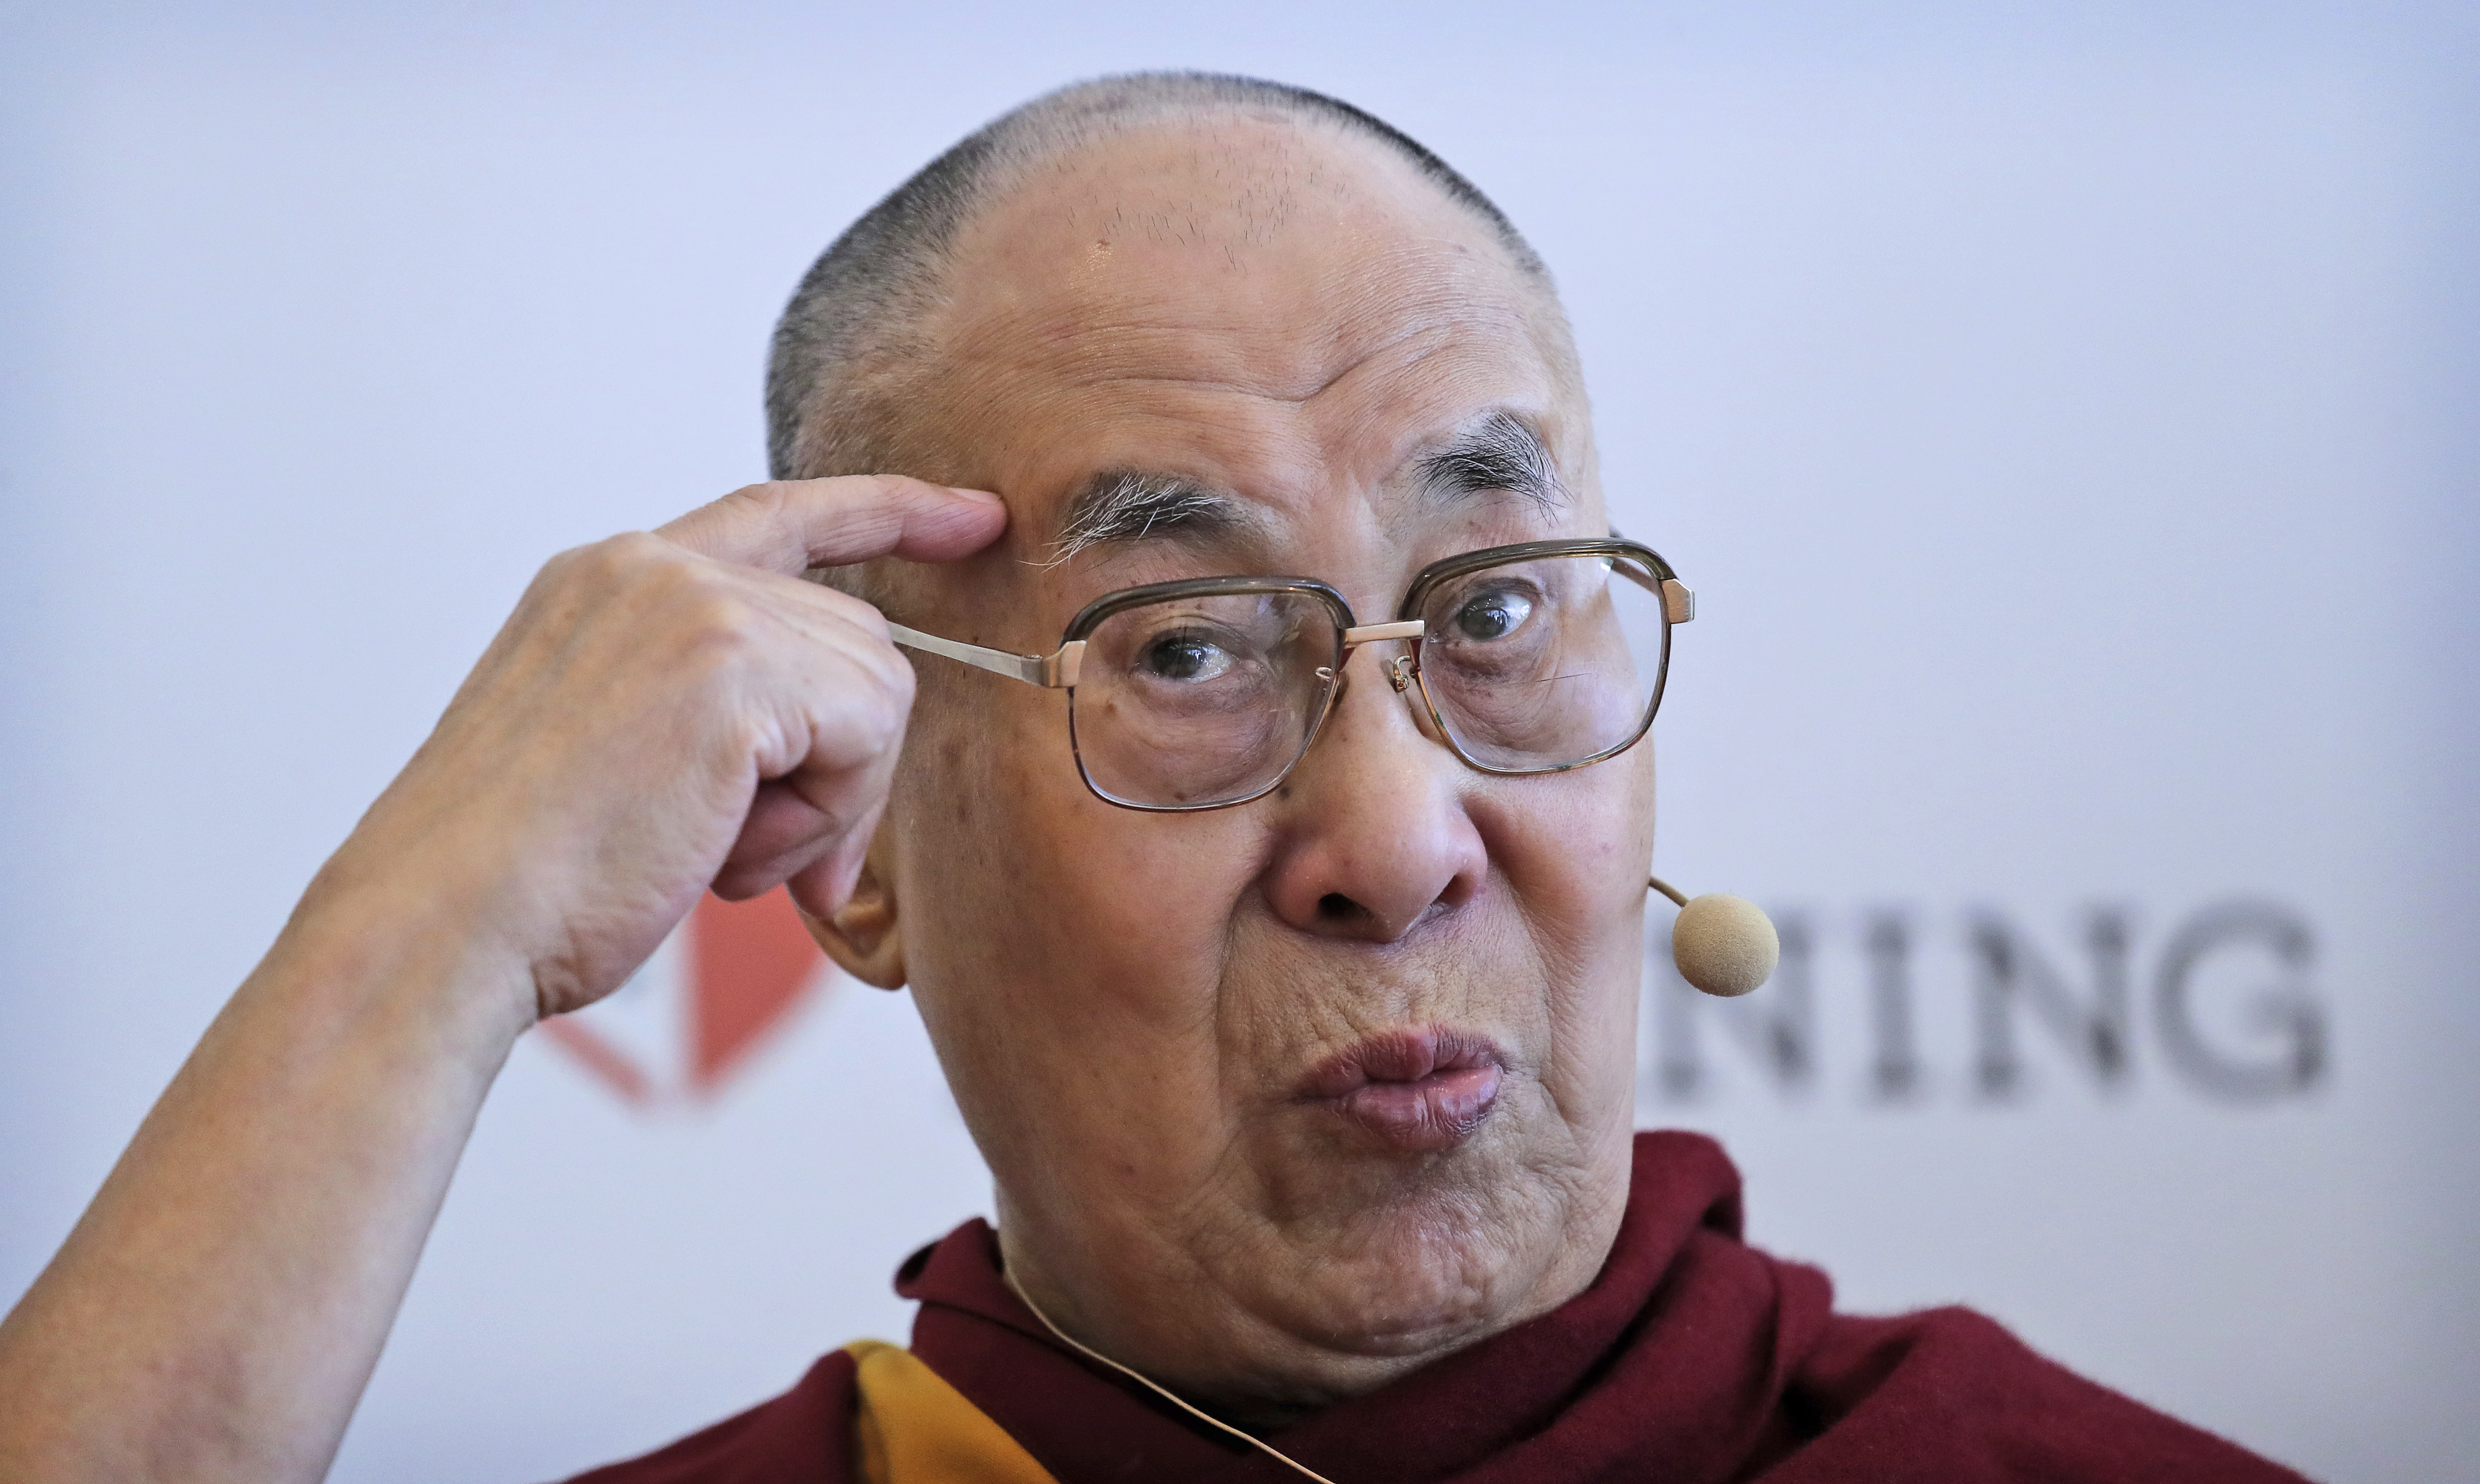 Dalai Lama lauds New Zealand PM for handling mosque attacks